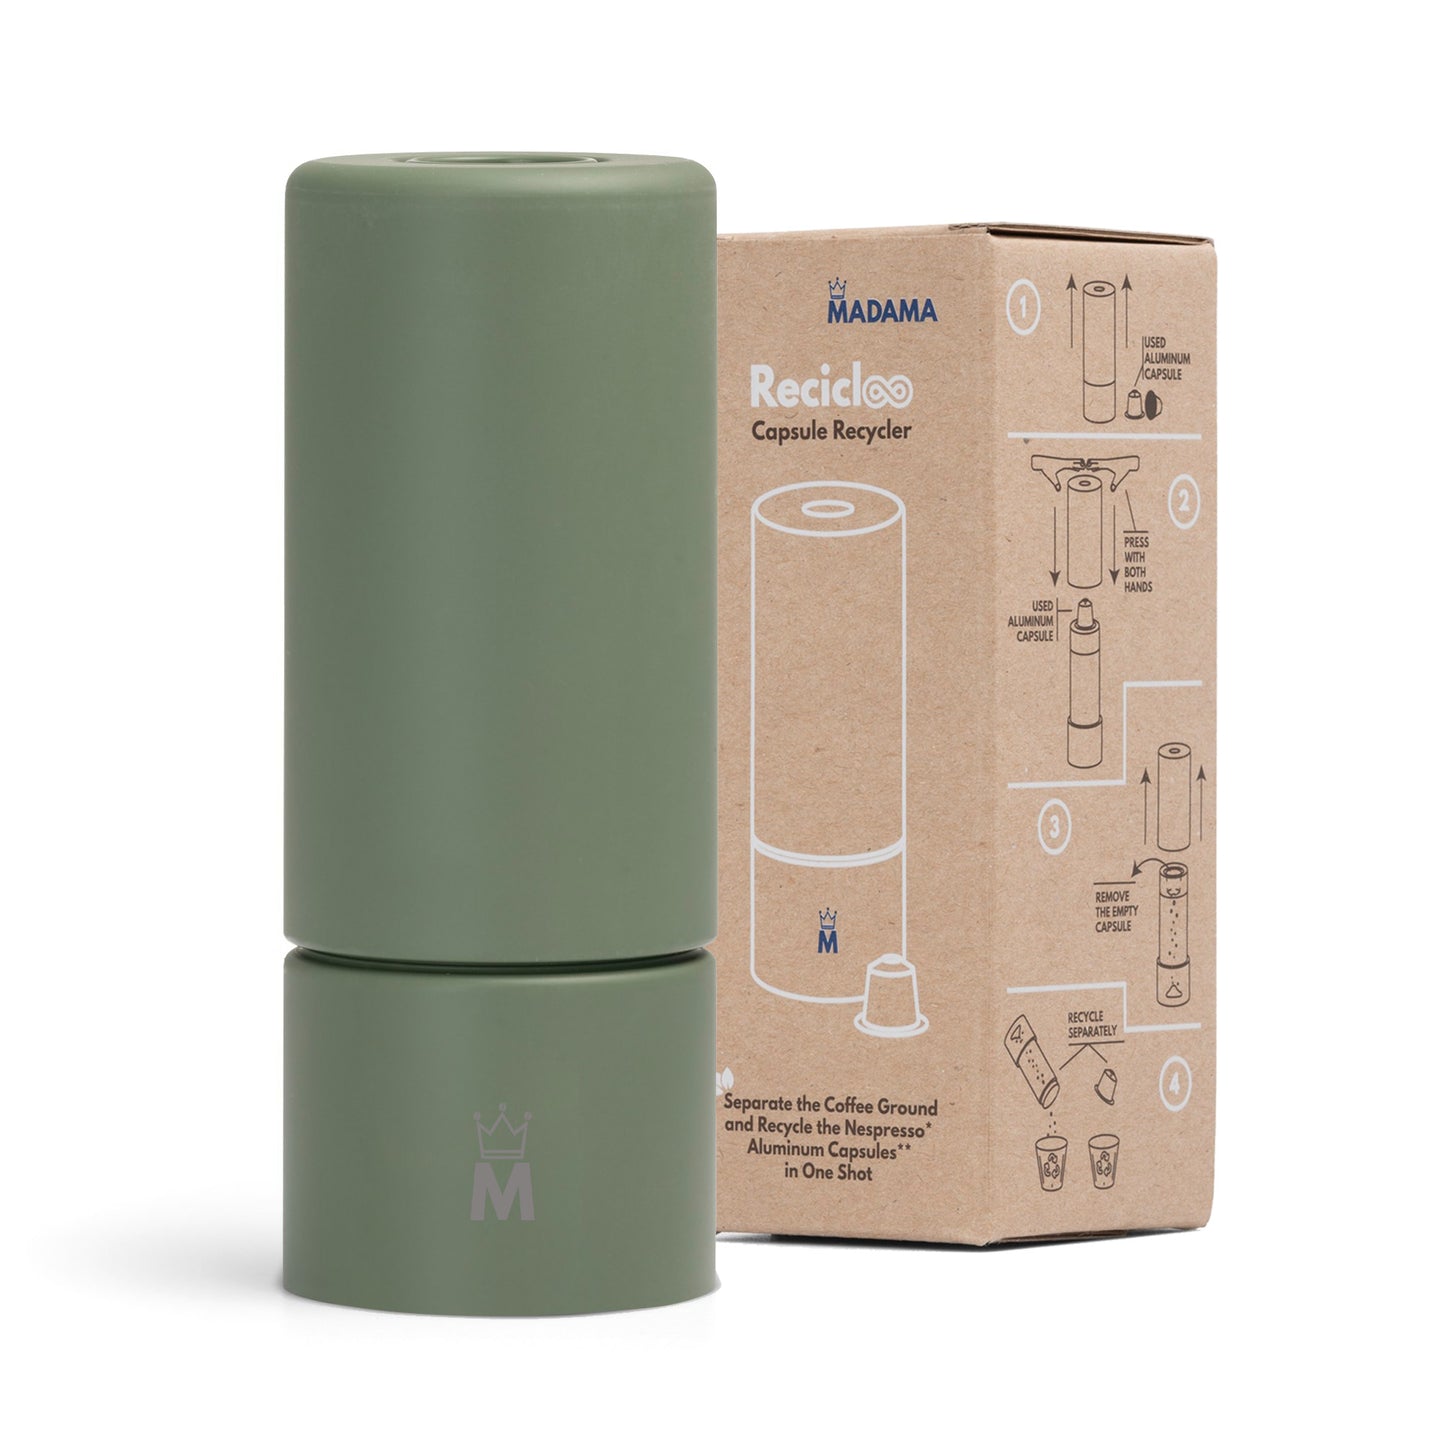 Madama Recicloo - Coffee Capsules Recycling Tool for Aluminum Nespresso Pods. Aluminum Capsule Recycler. Green